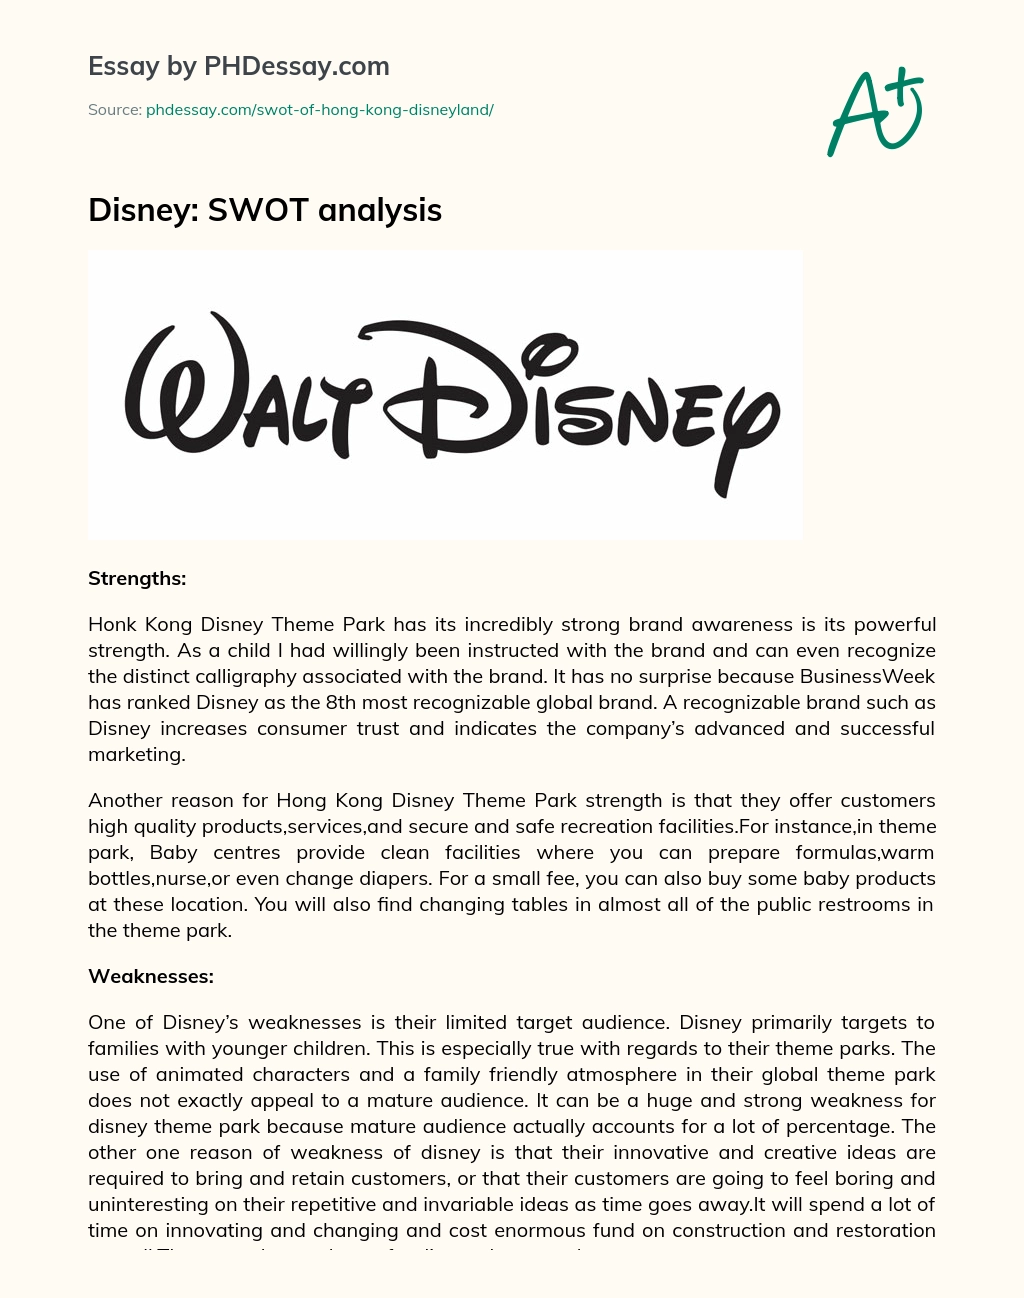 Disney: SWOT Analysis essay